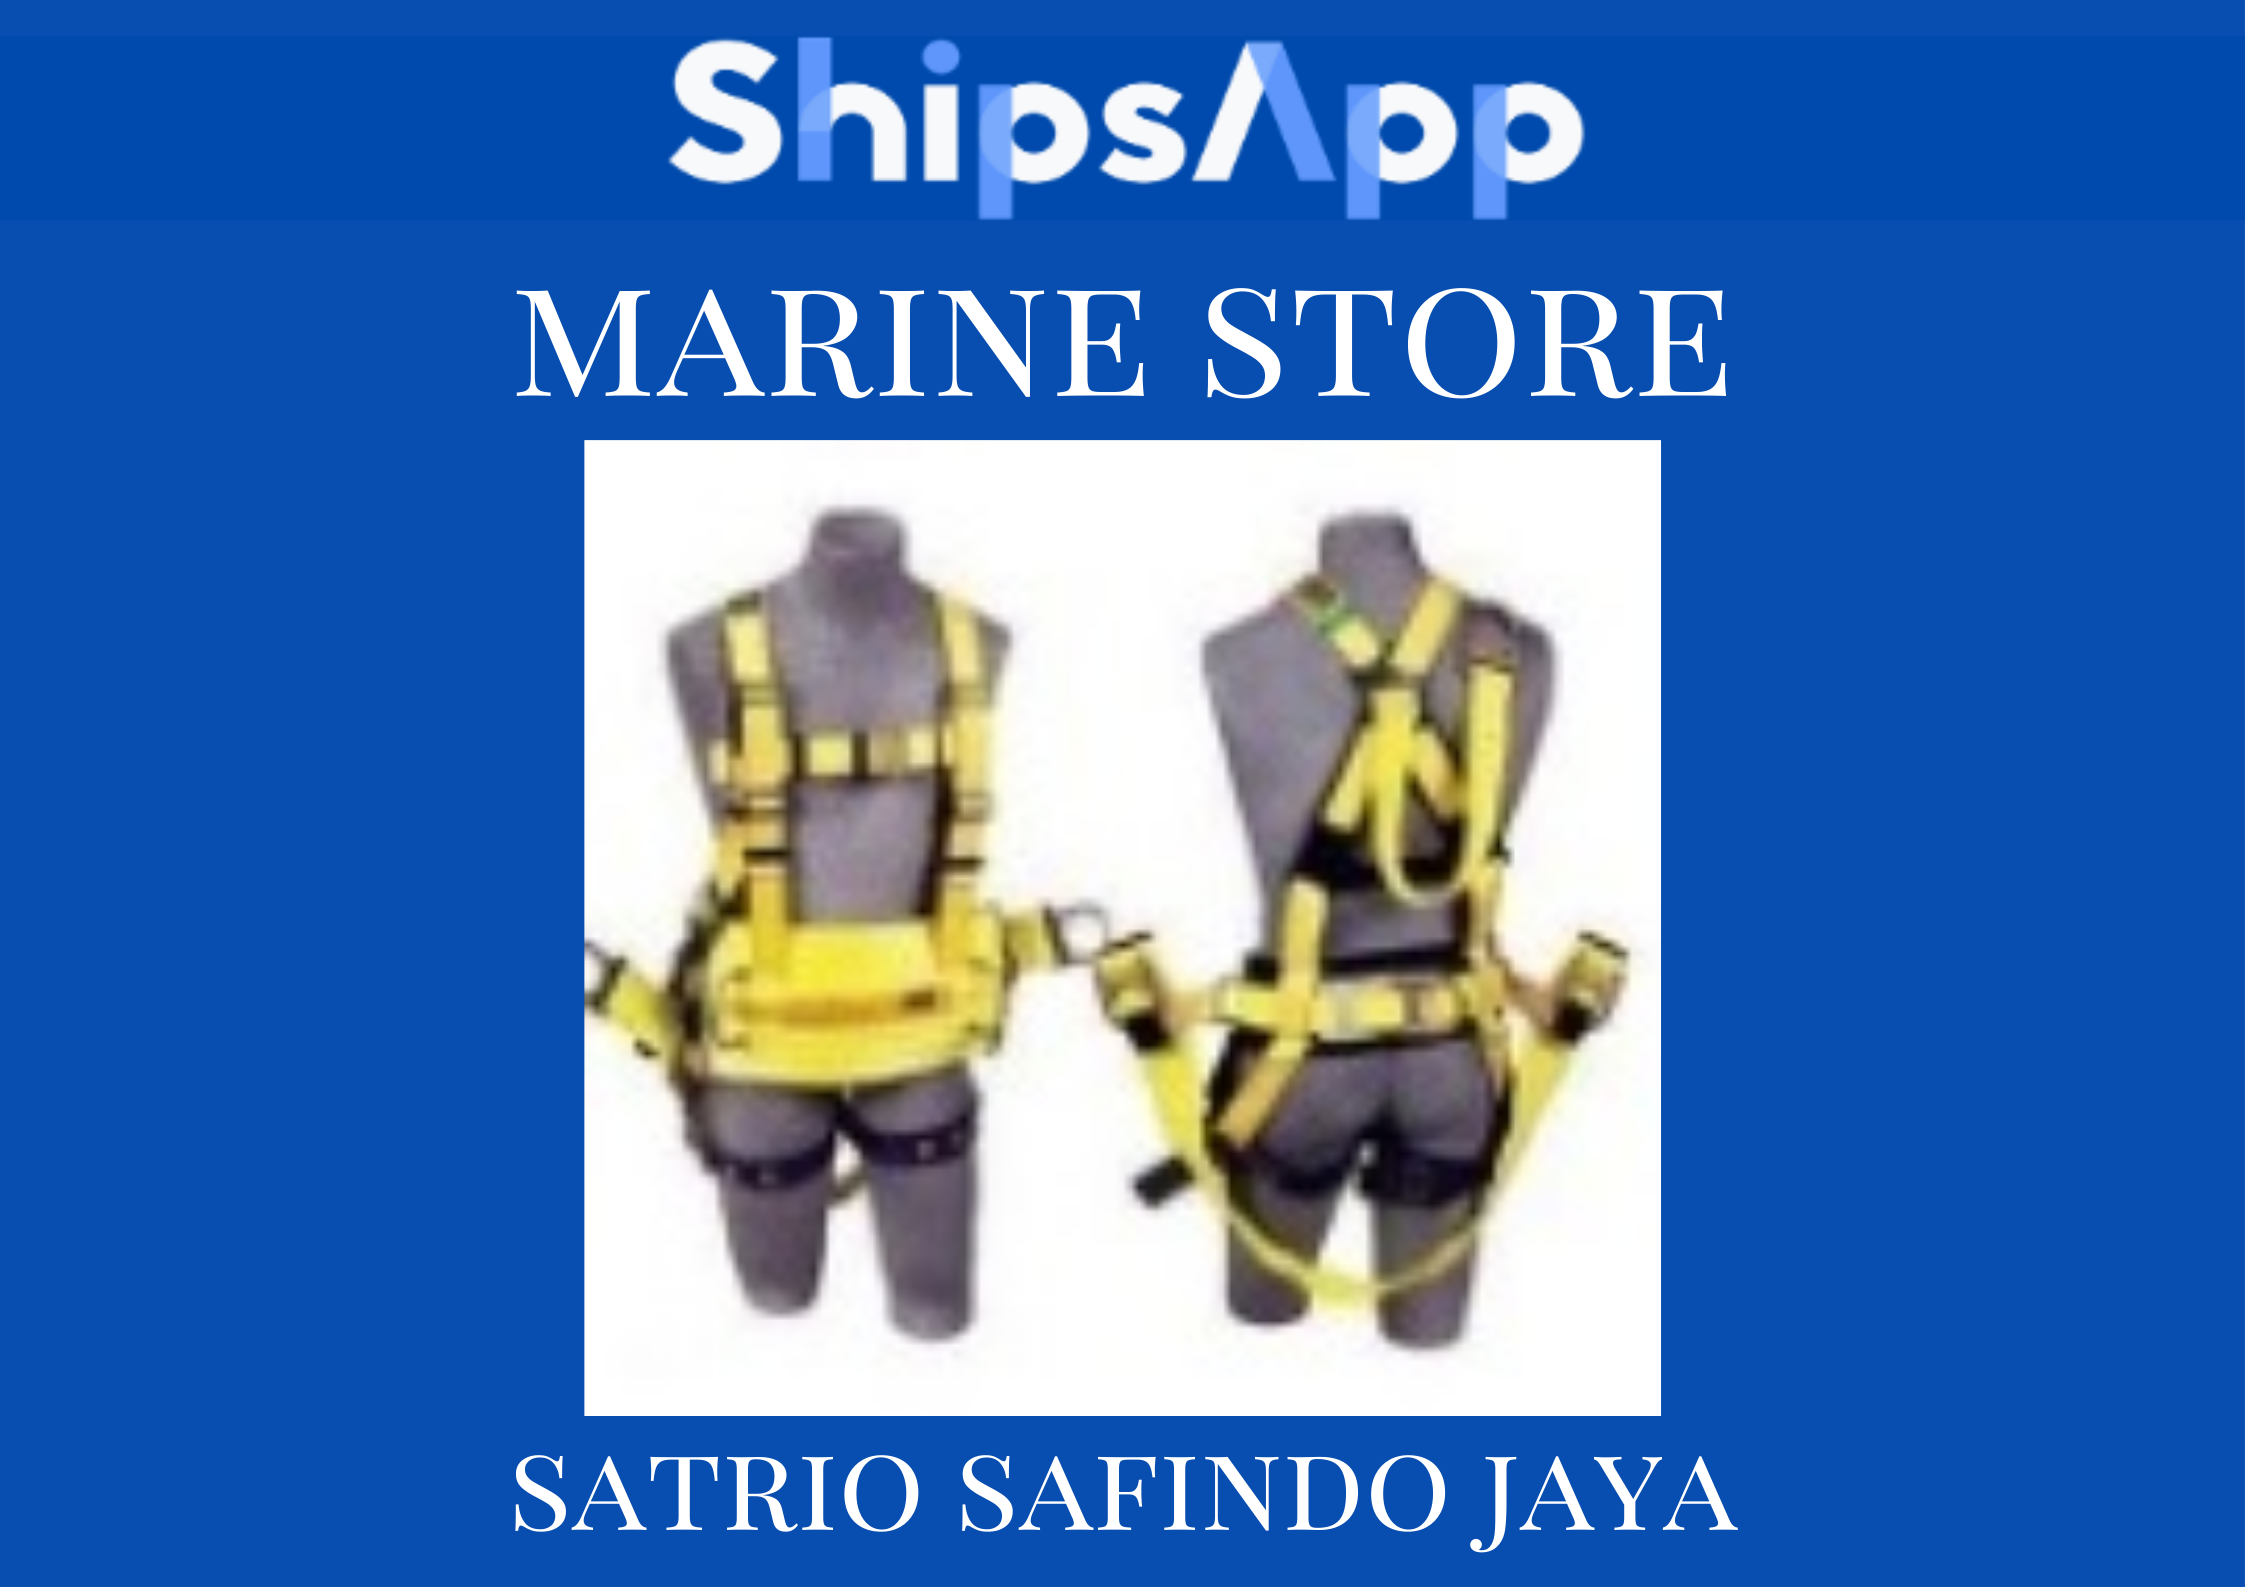 Marine Store Satrio Safindo Jaya